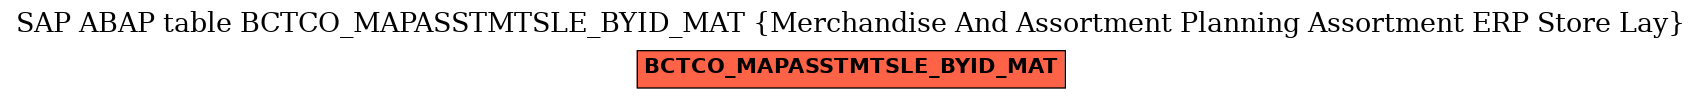 E-R Diagram for table BCTCO_MAPASSTMTSLE_BYID_MAT (Merchandise And Assortment Planning Assortment ERP Store Lay)